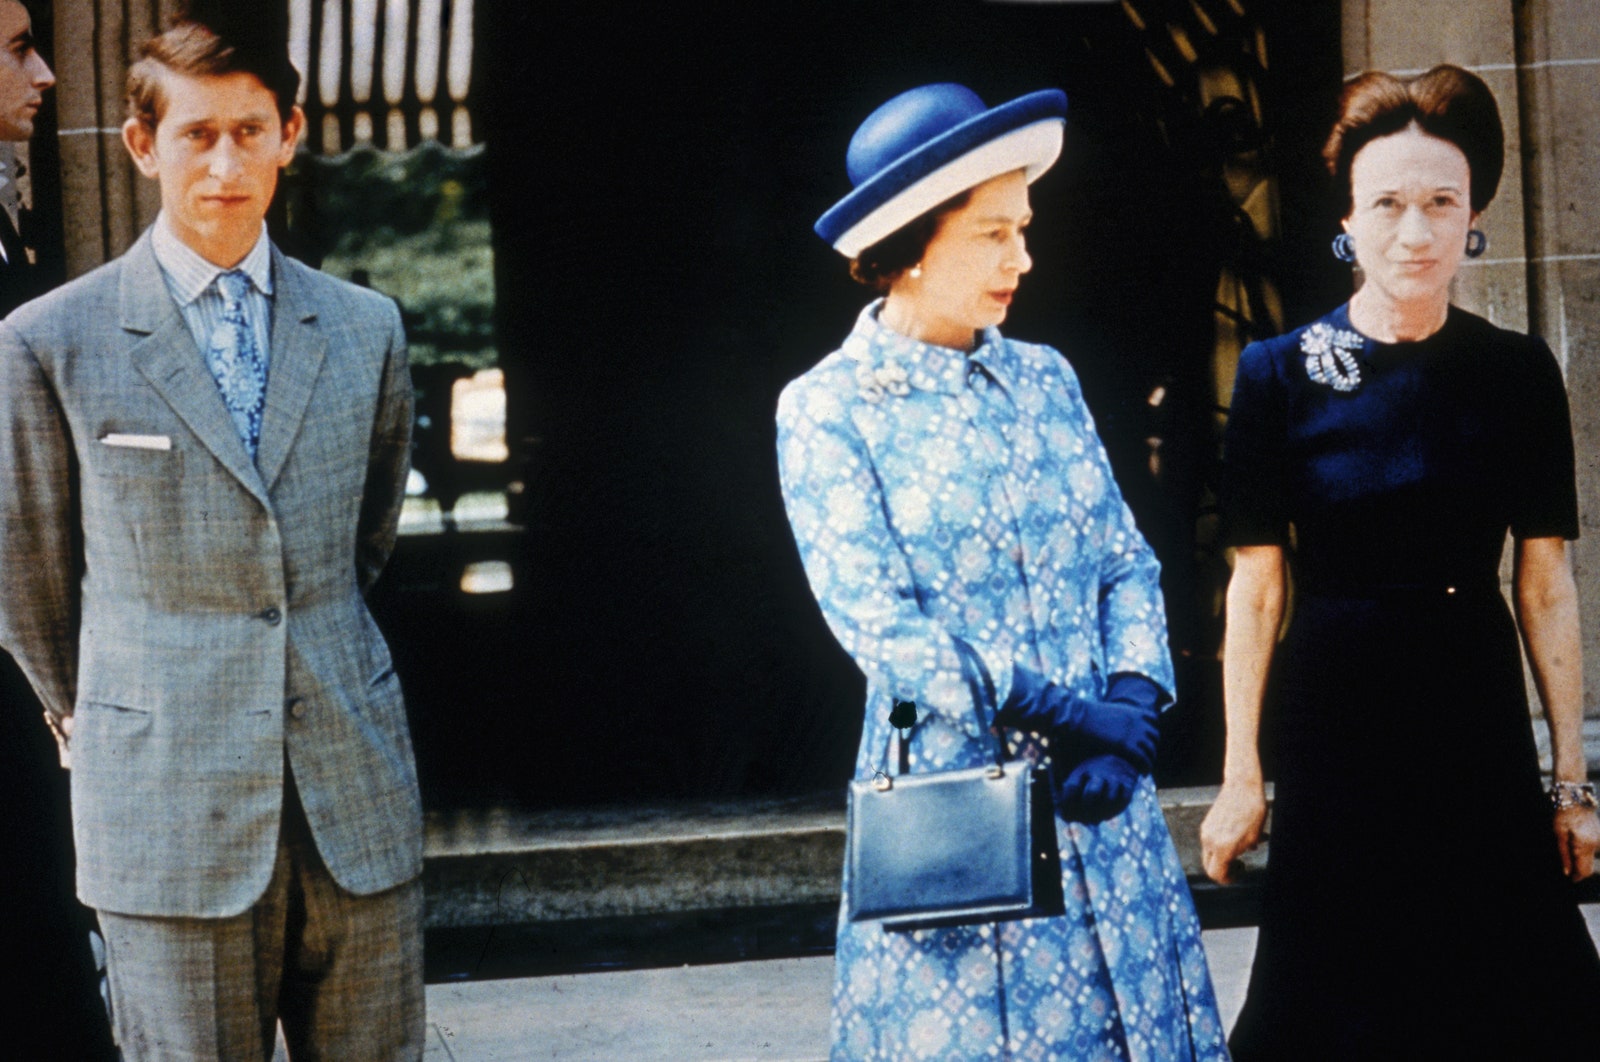 Принц Чарльз королева Елизавета II и герцогиня Виндзорская в Париже 1972.